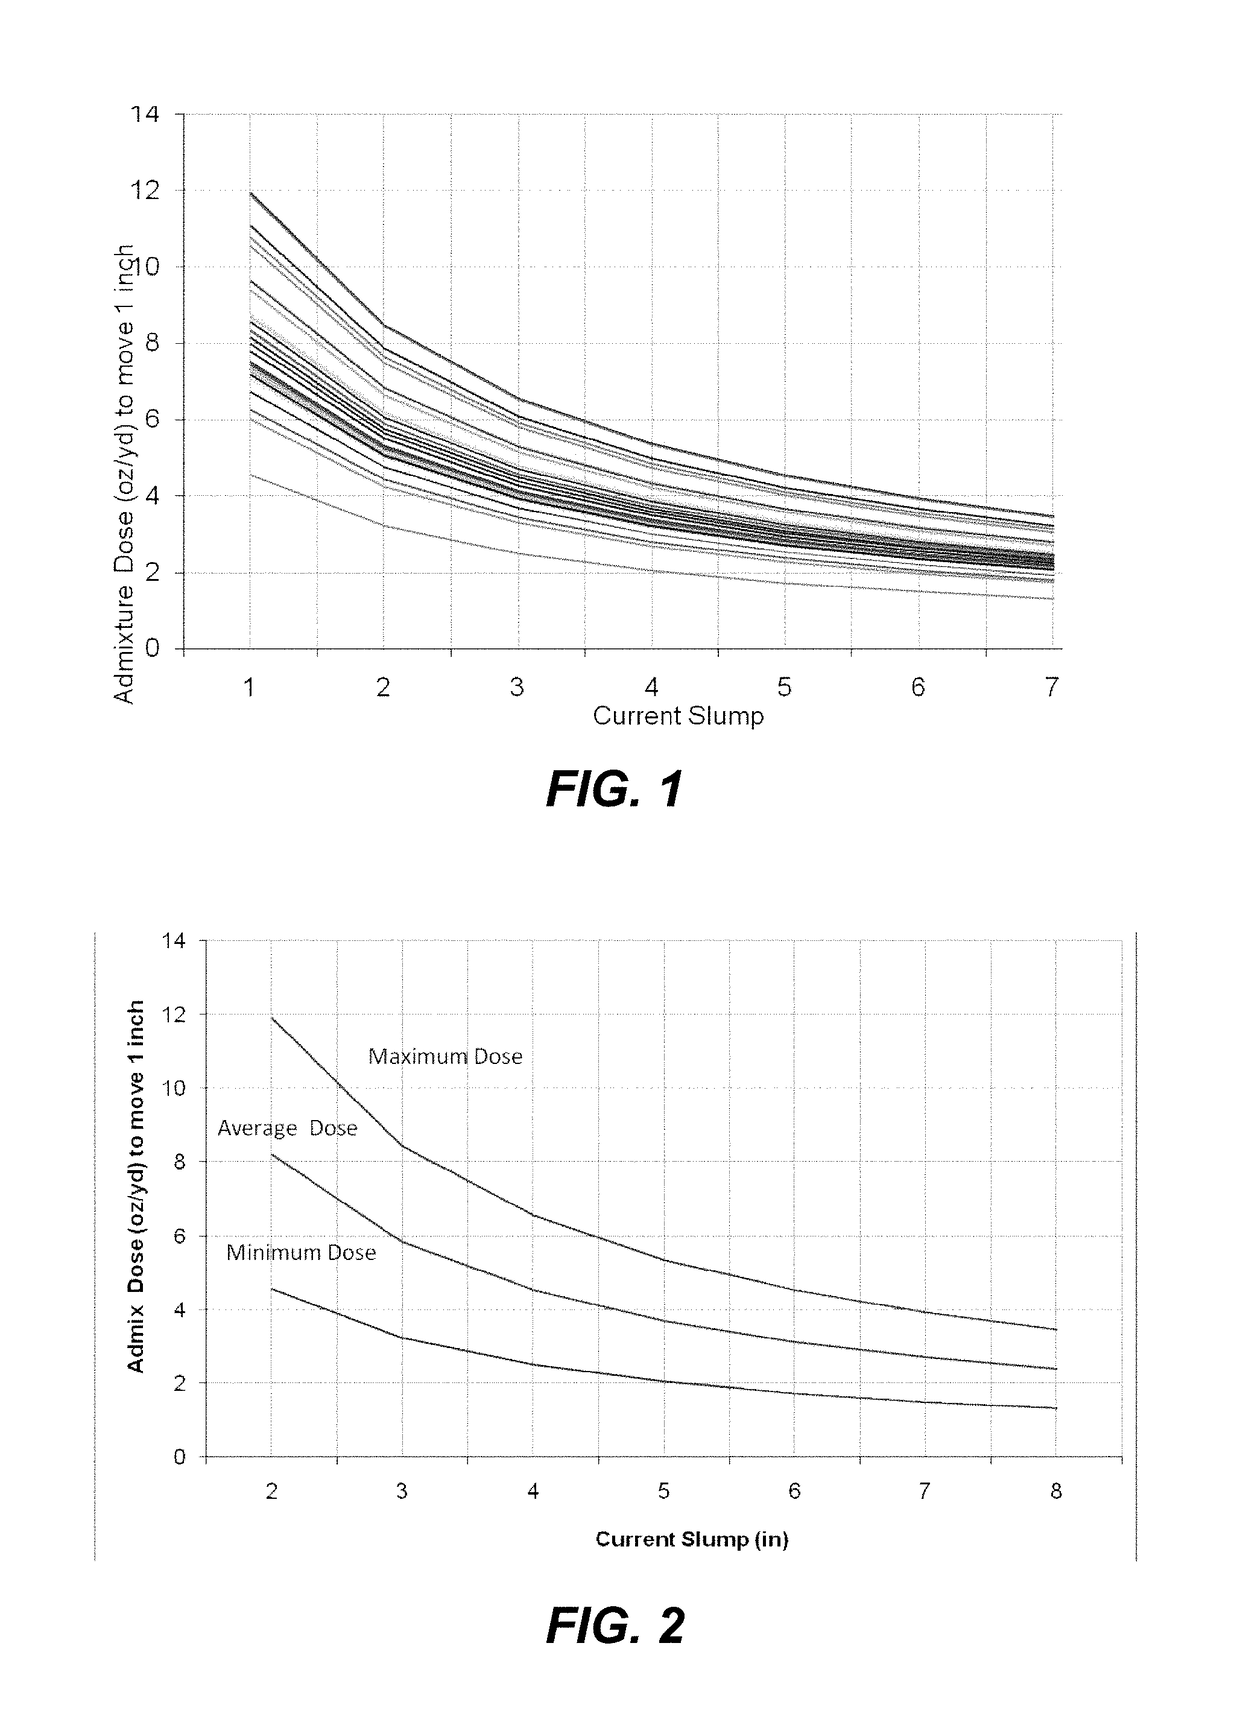 Method for adjusting concrete rheology based upon nominal dose-response profile